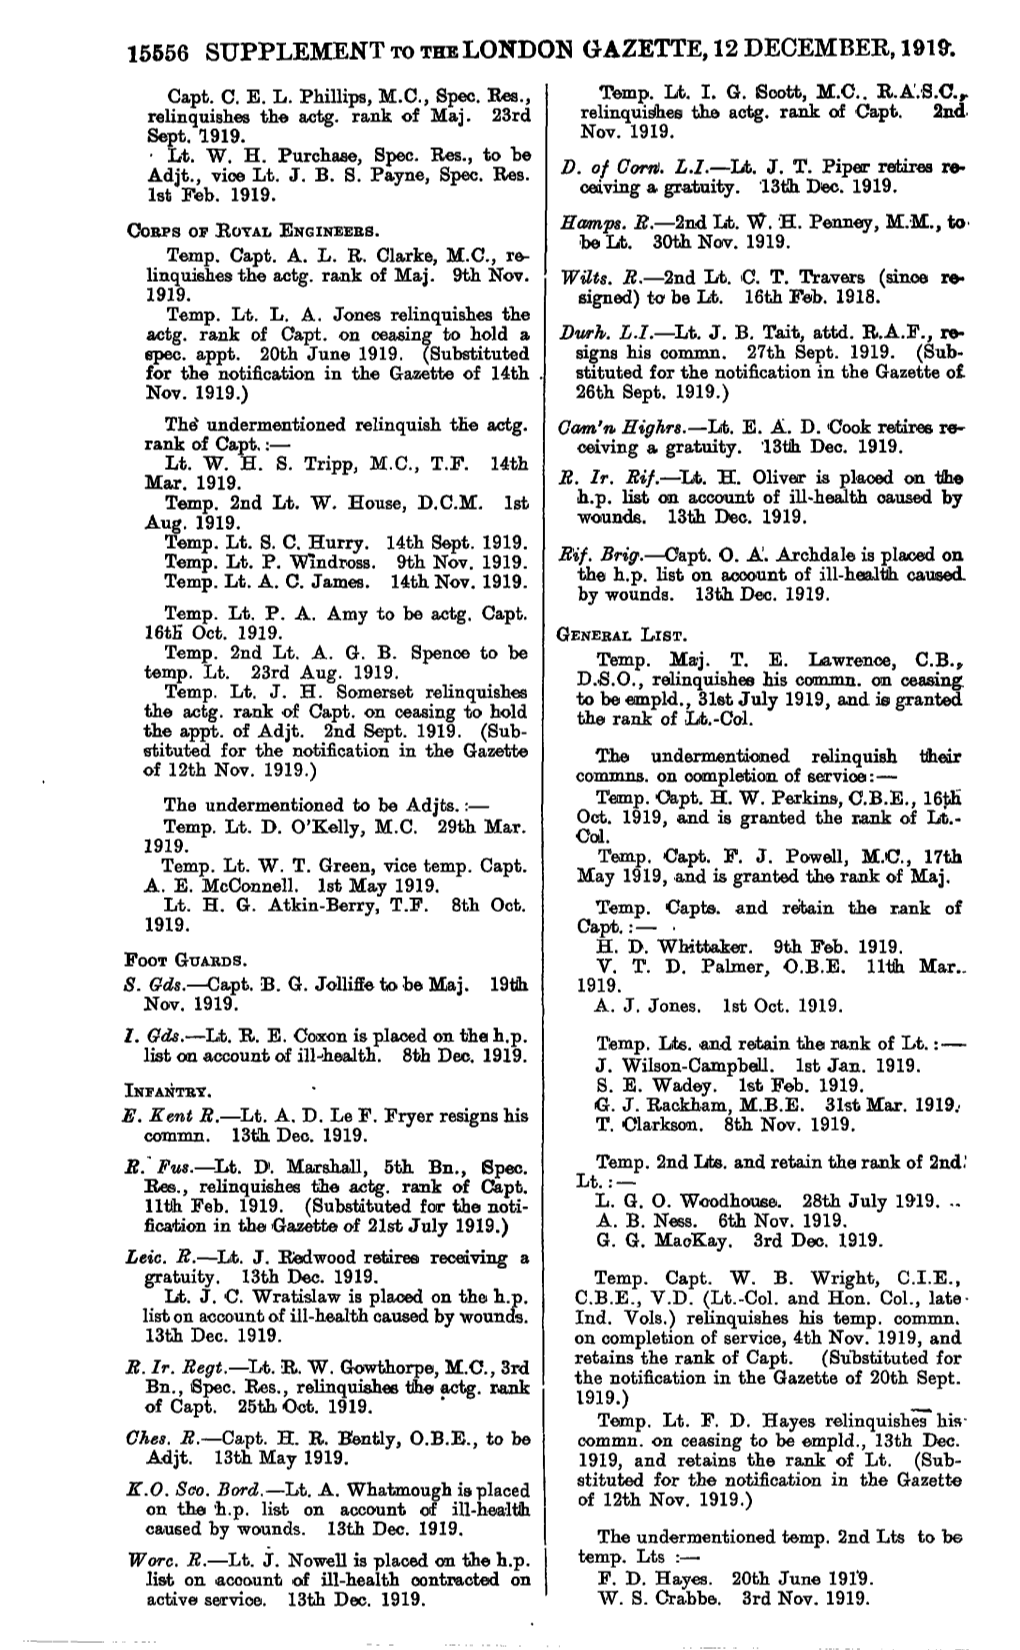 15556 Supplement to the London Gazette, 12 December, 1919